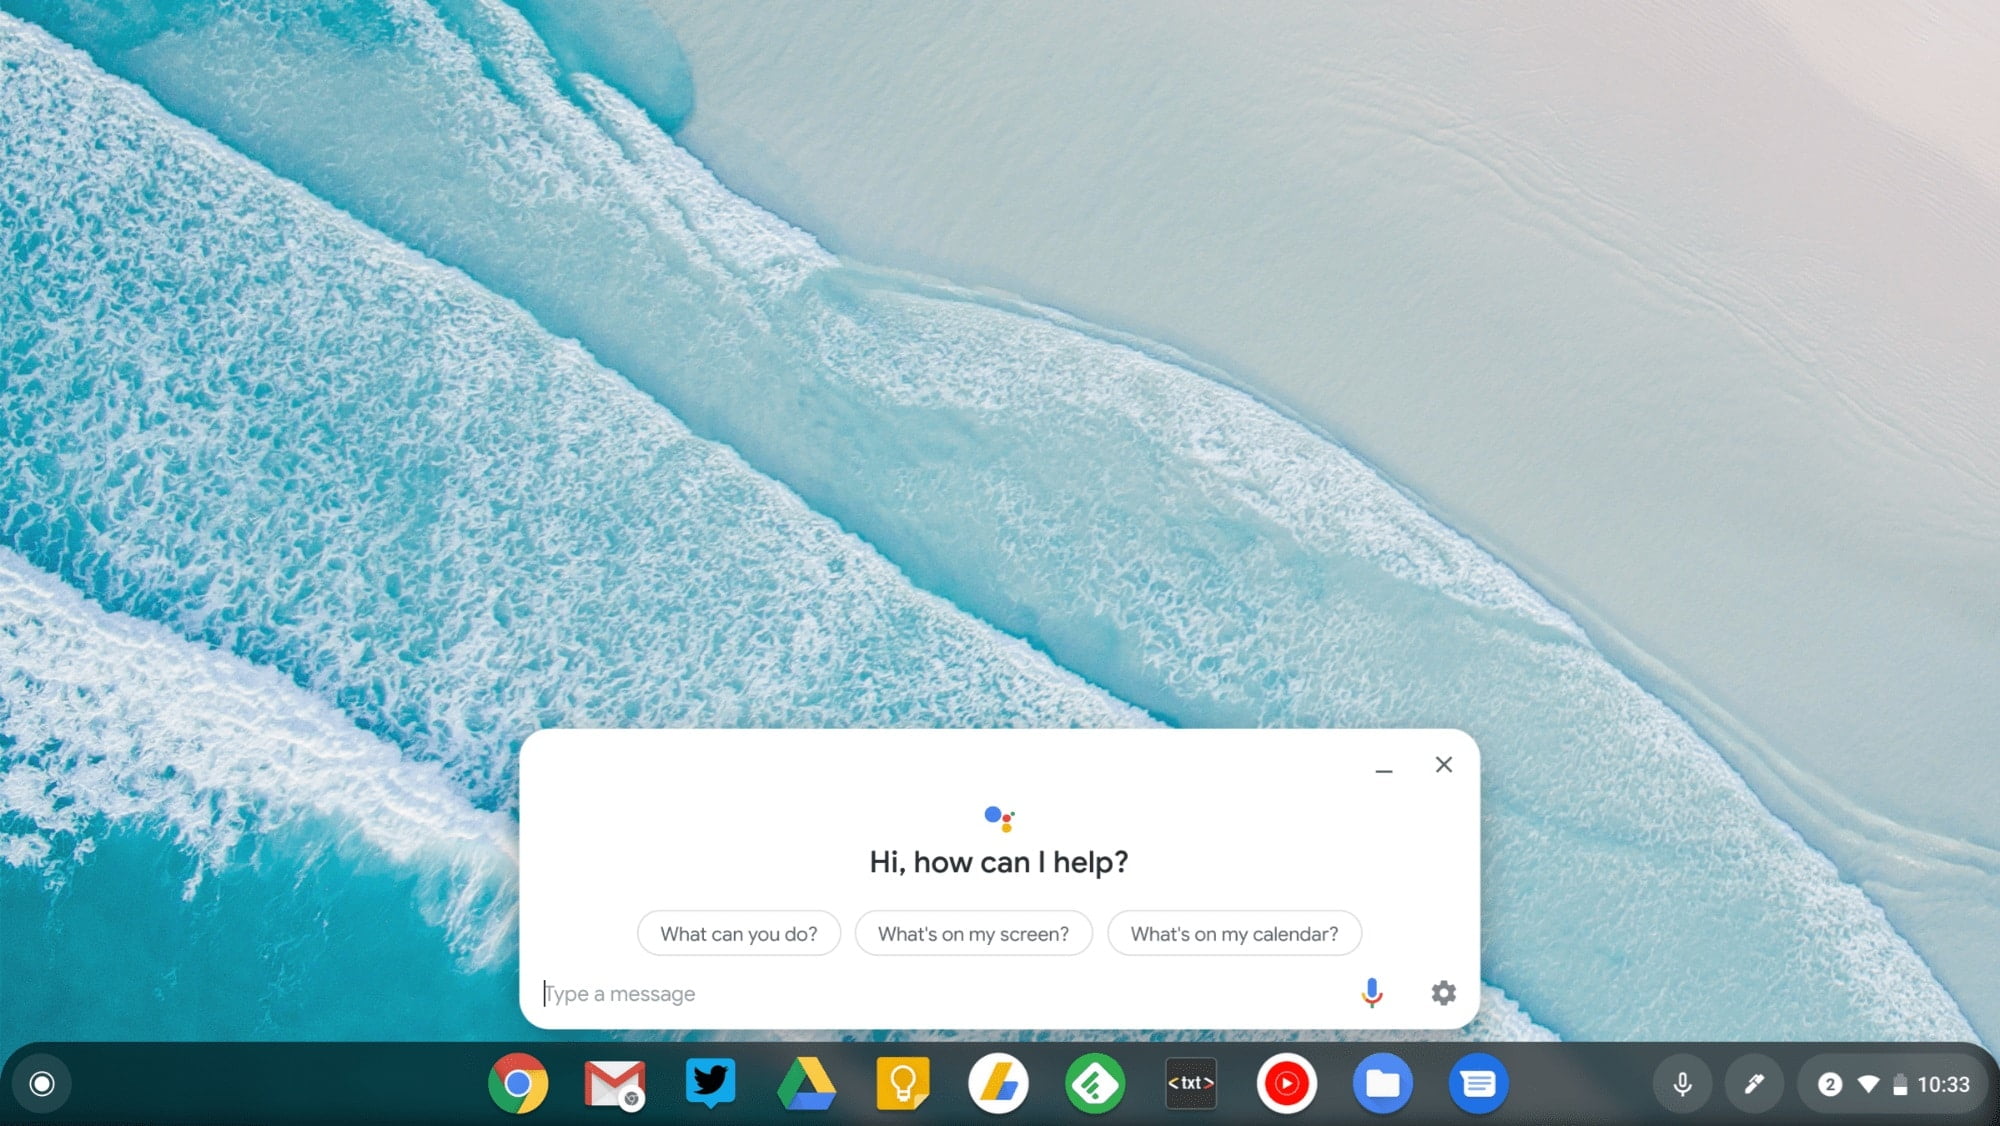 ChromeOS desktop image